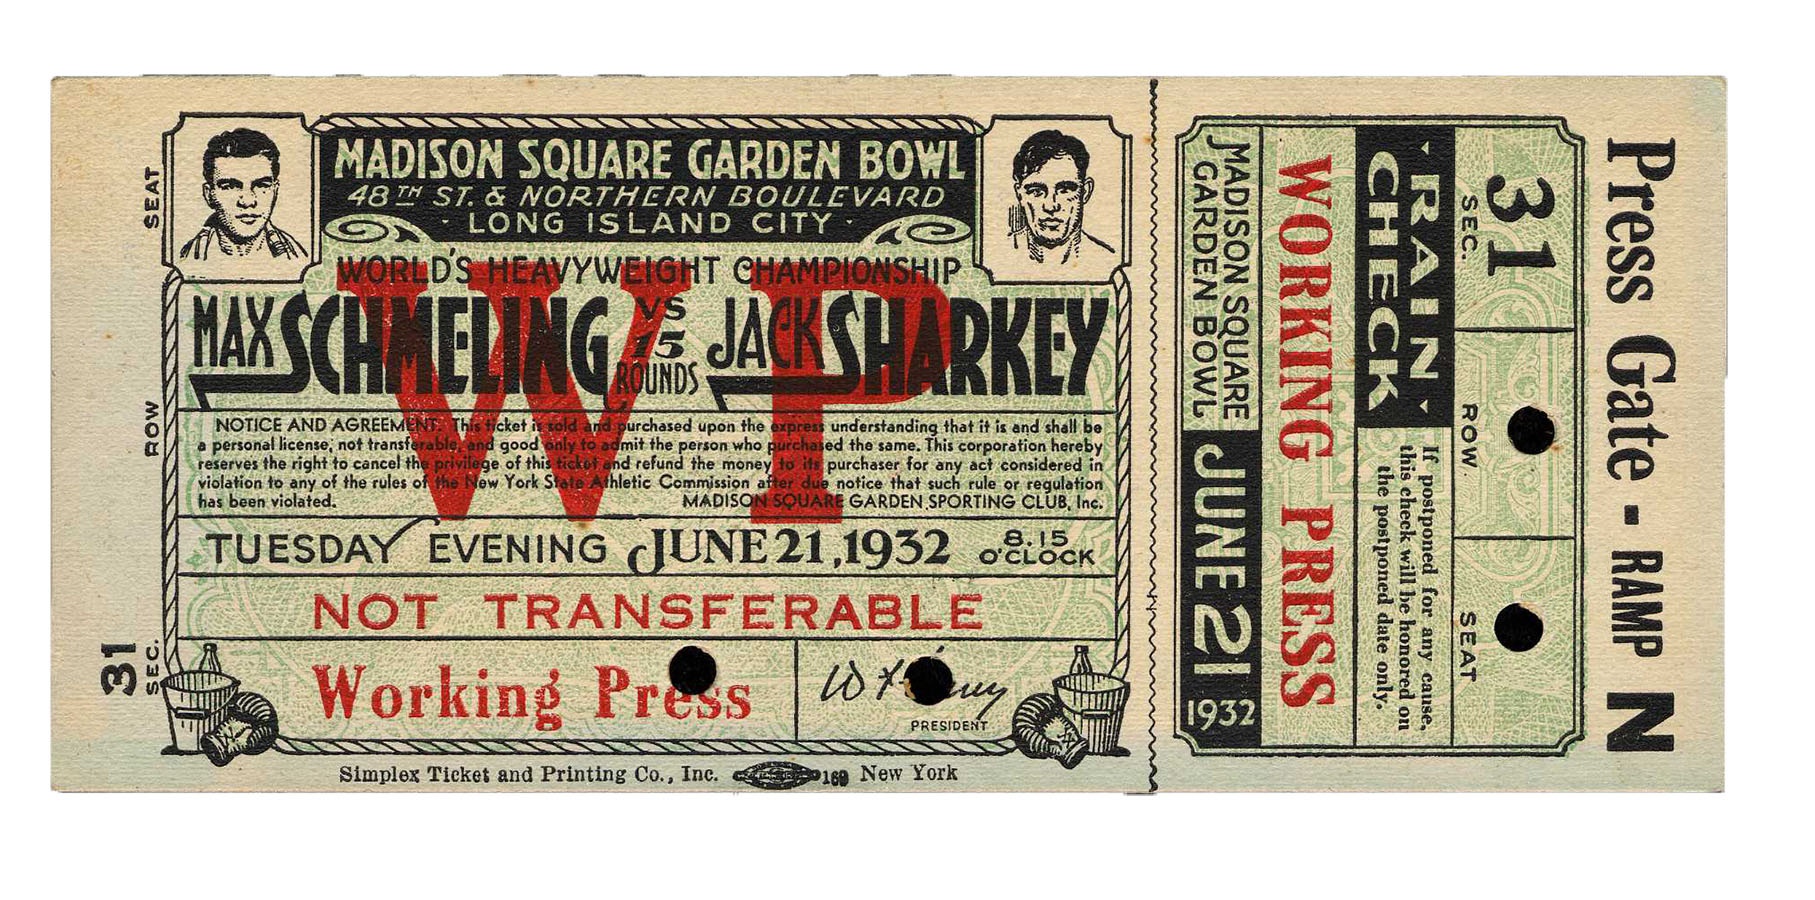 - Schmeling-Sharkey Full Ticket (1932)